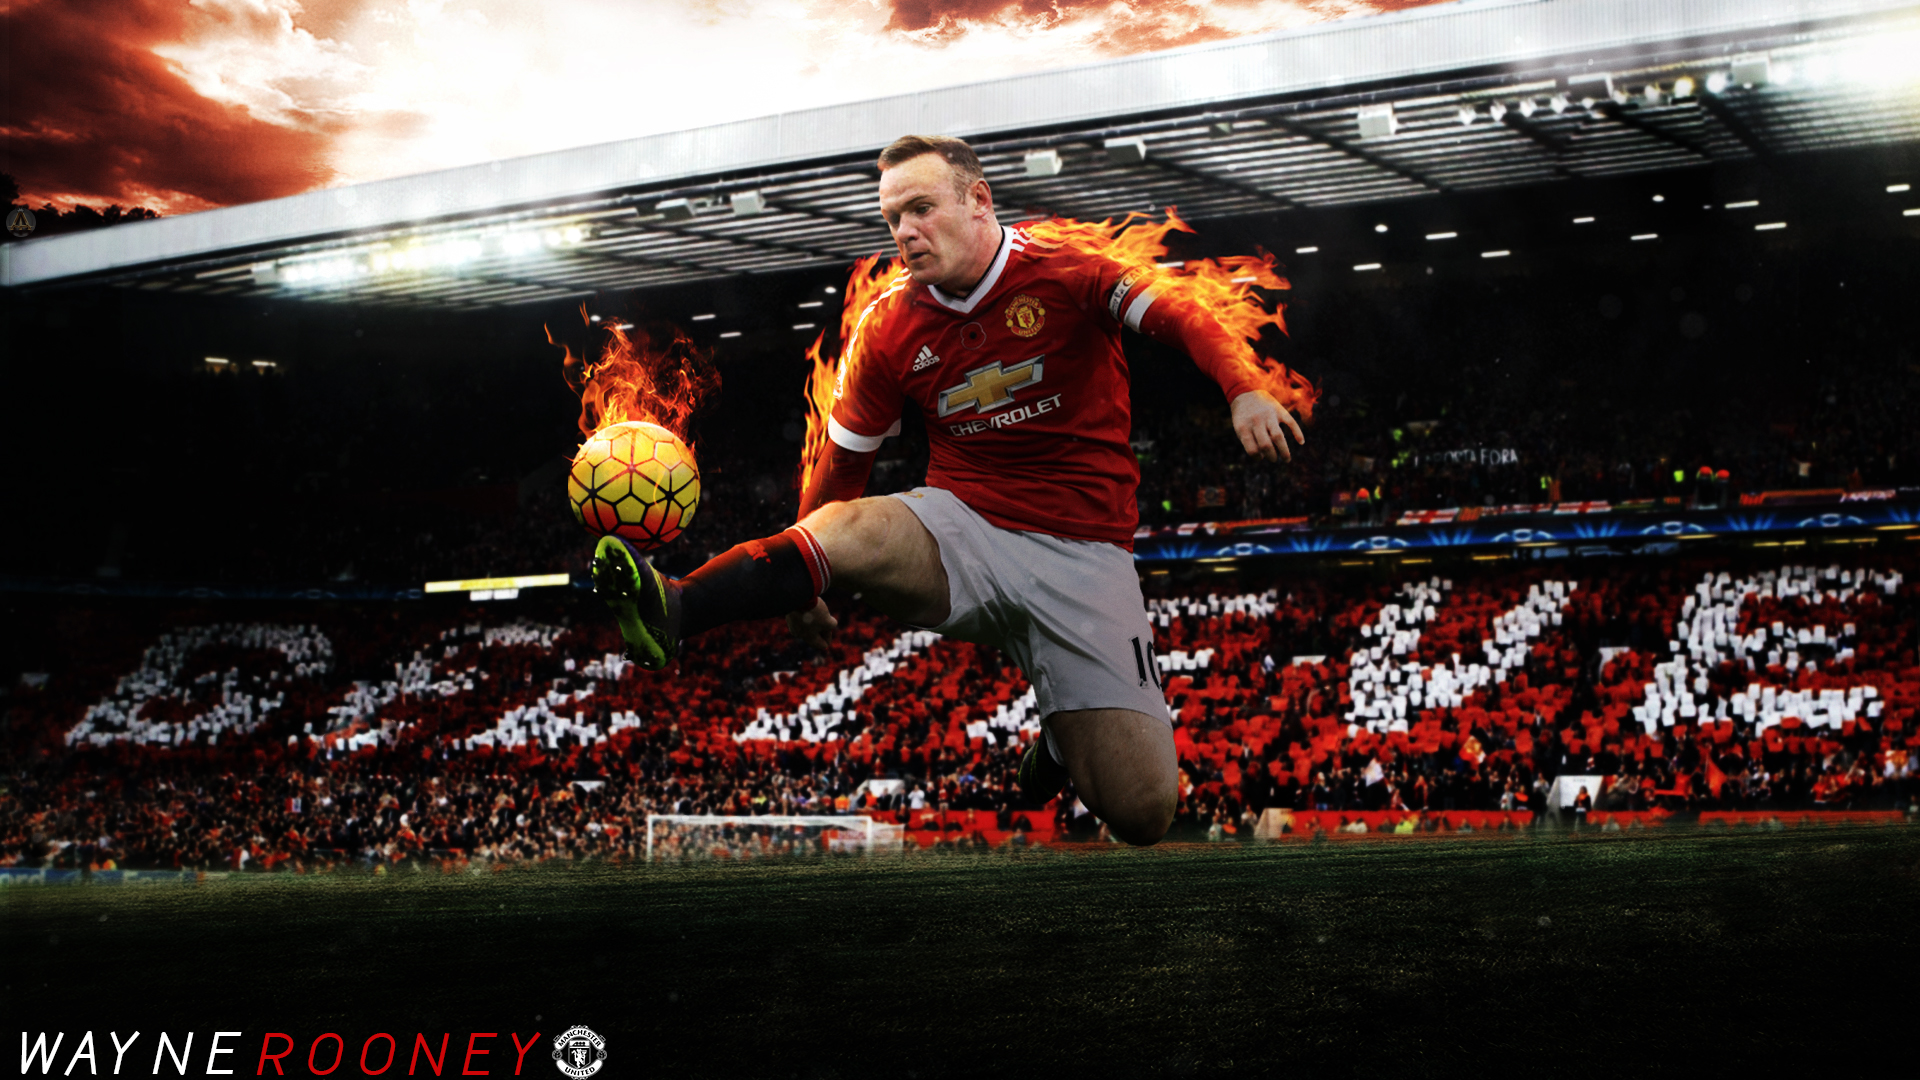 Adik1910 on Twitter WayneRooney mobile wallpaper Rooney United ManUtd  RedDevil WR10 ManchesterUnited httpstcoLPZ9jcXk4O  X